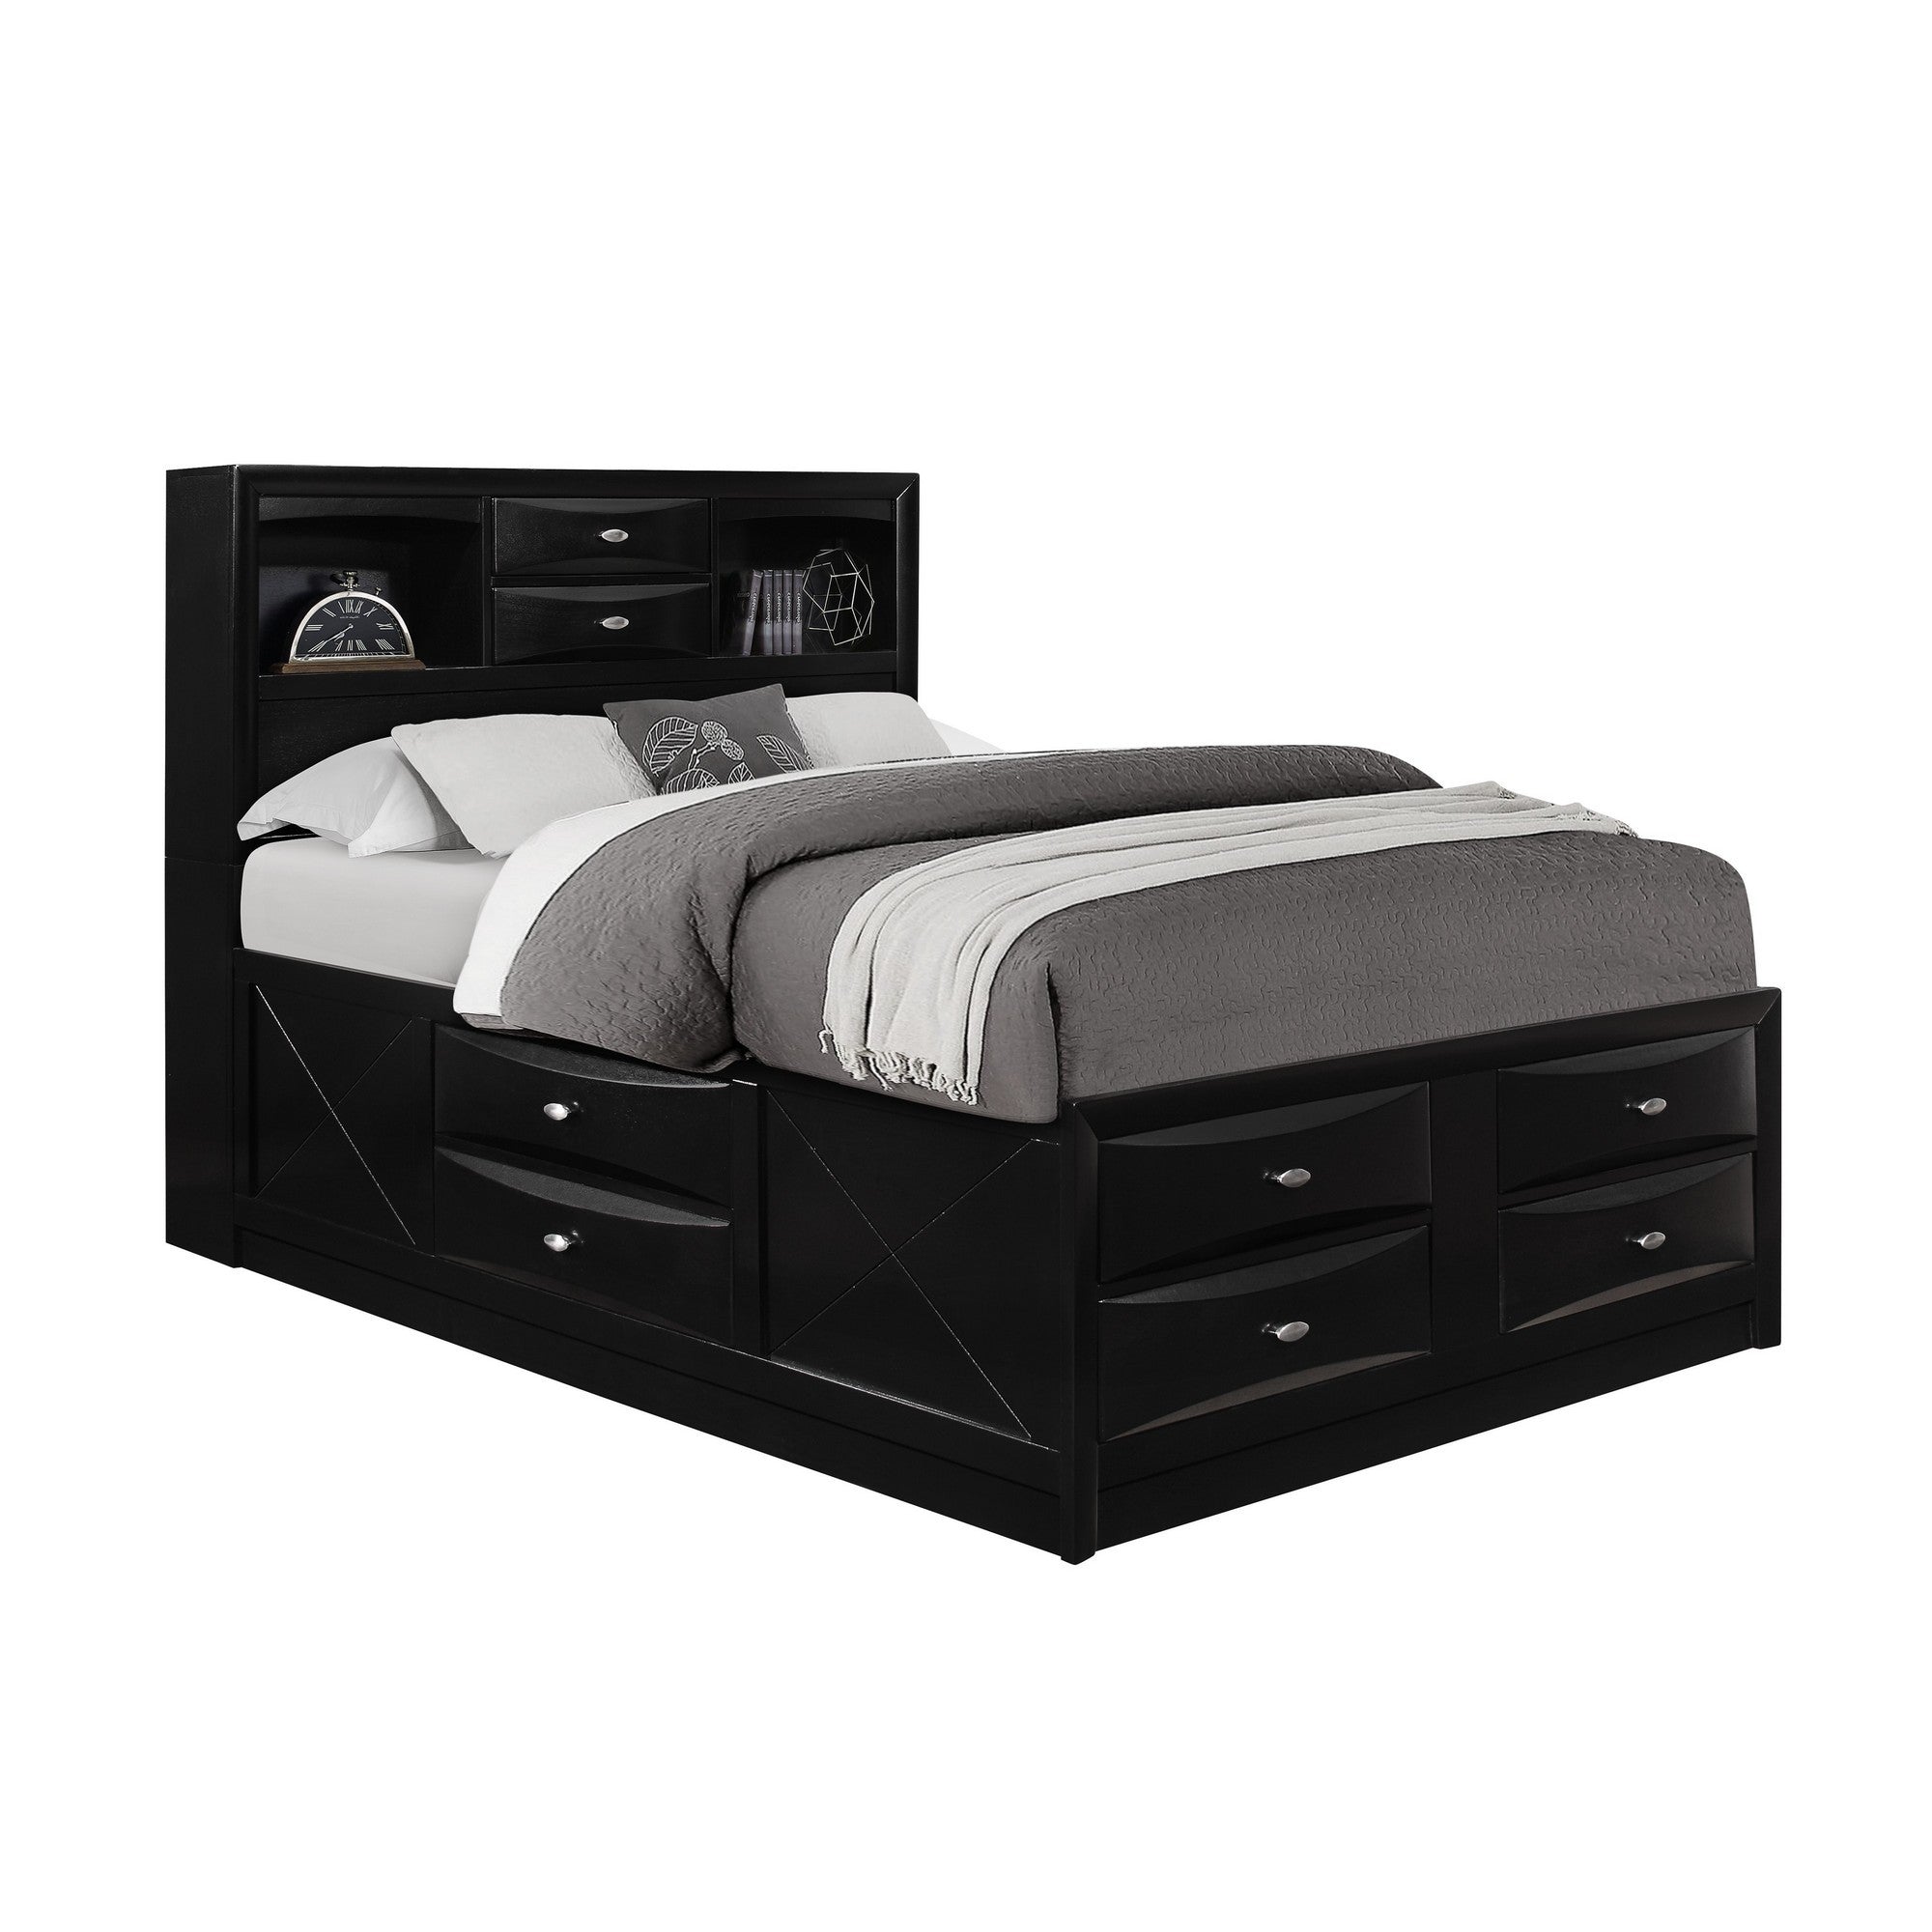 Black Veneer Full Bed with bookcase headboard  10 drawers Default Title